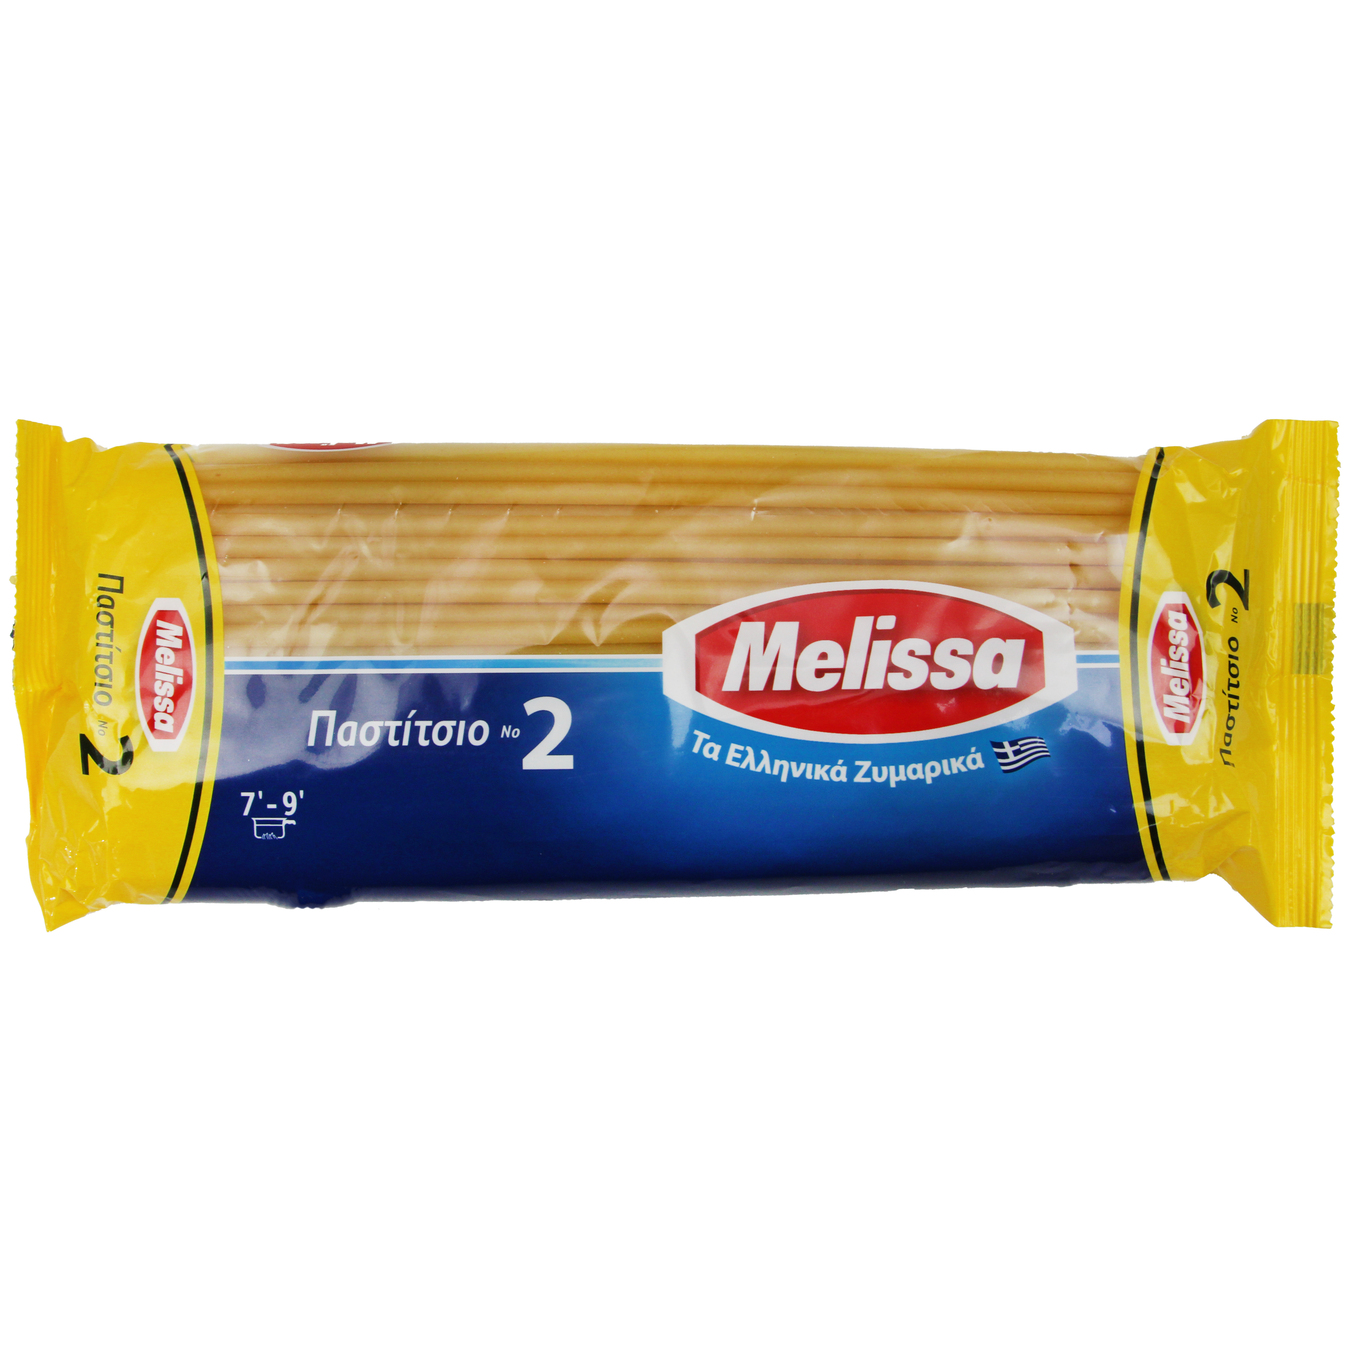 Melissa №2 Pasta 500g